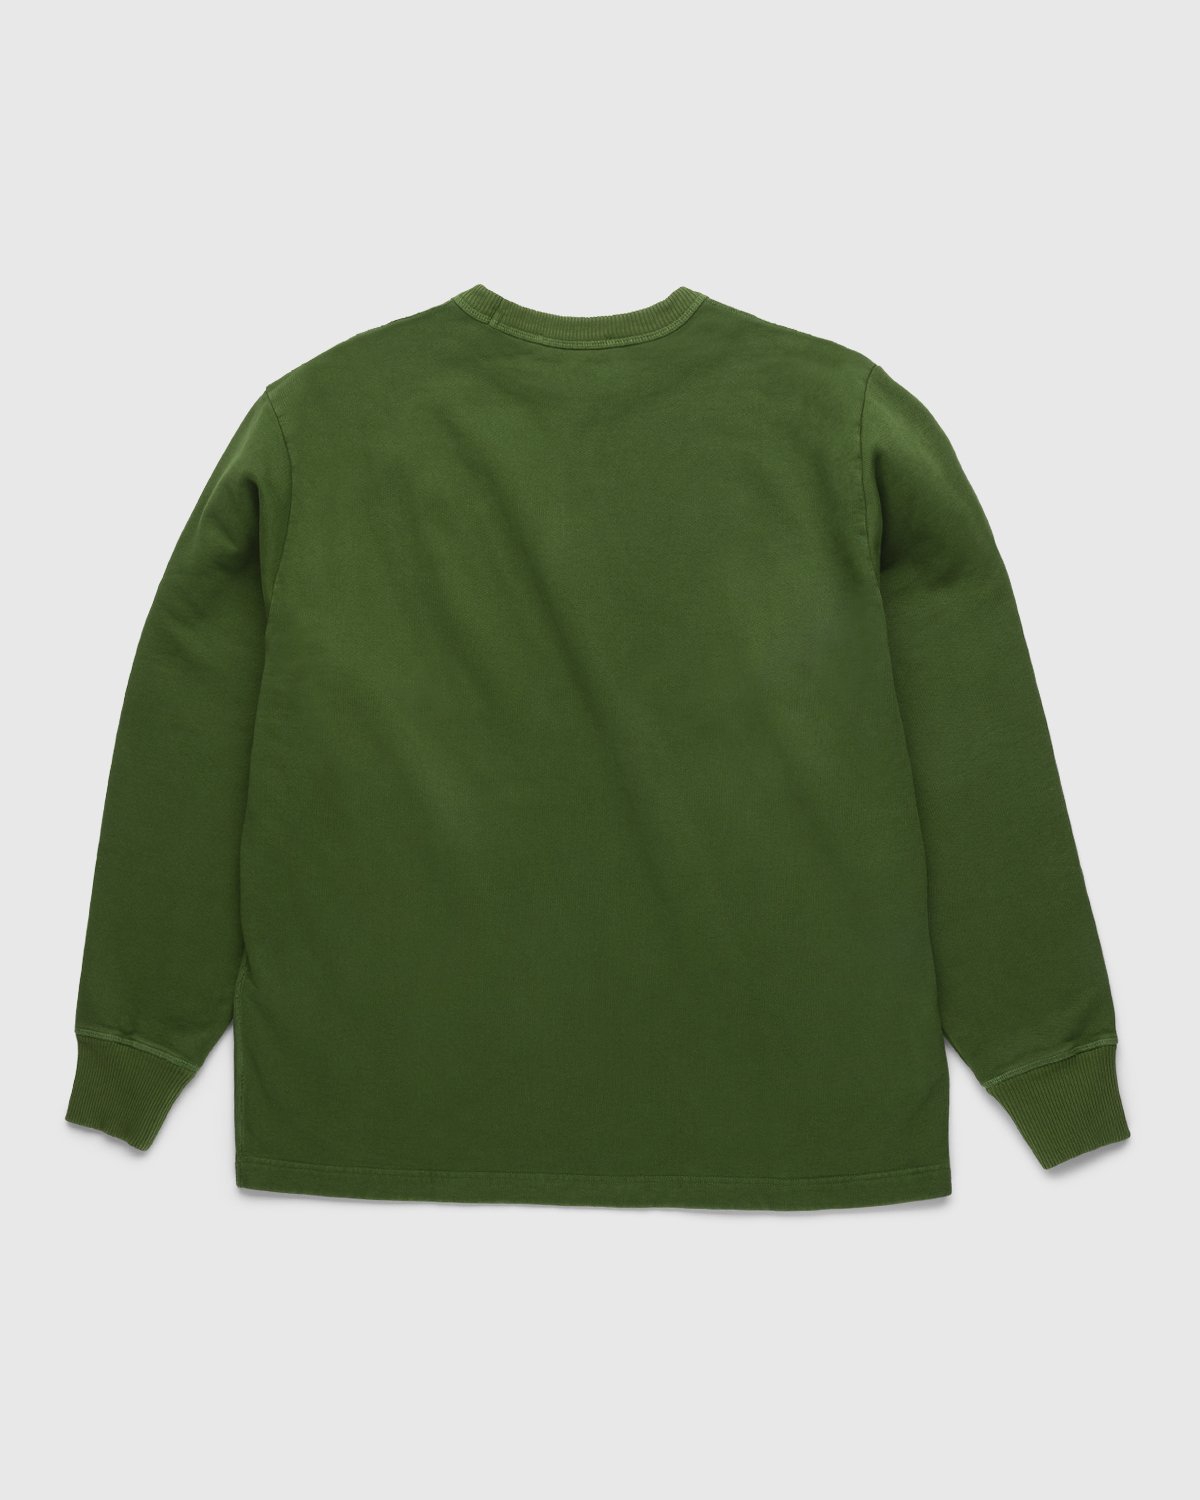 Acne Studios - Organic Cotton Crewneck Sweatshirt Bottle Green - Clothing - Green - Image 2